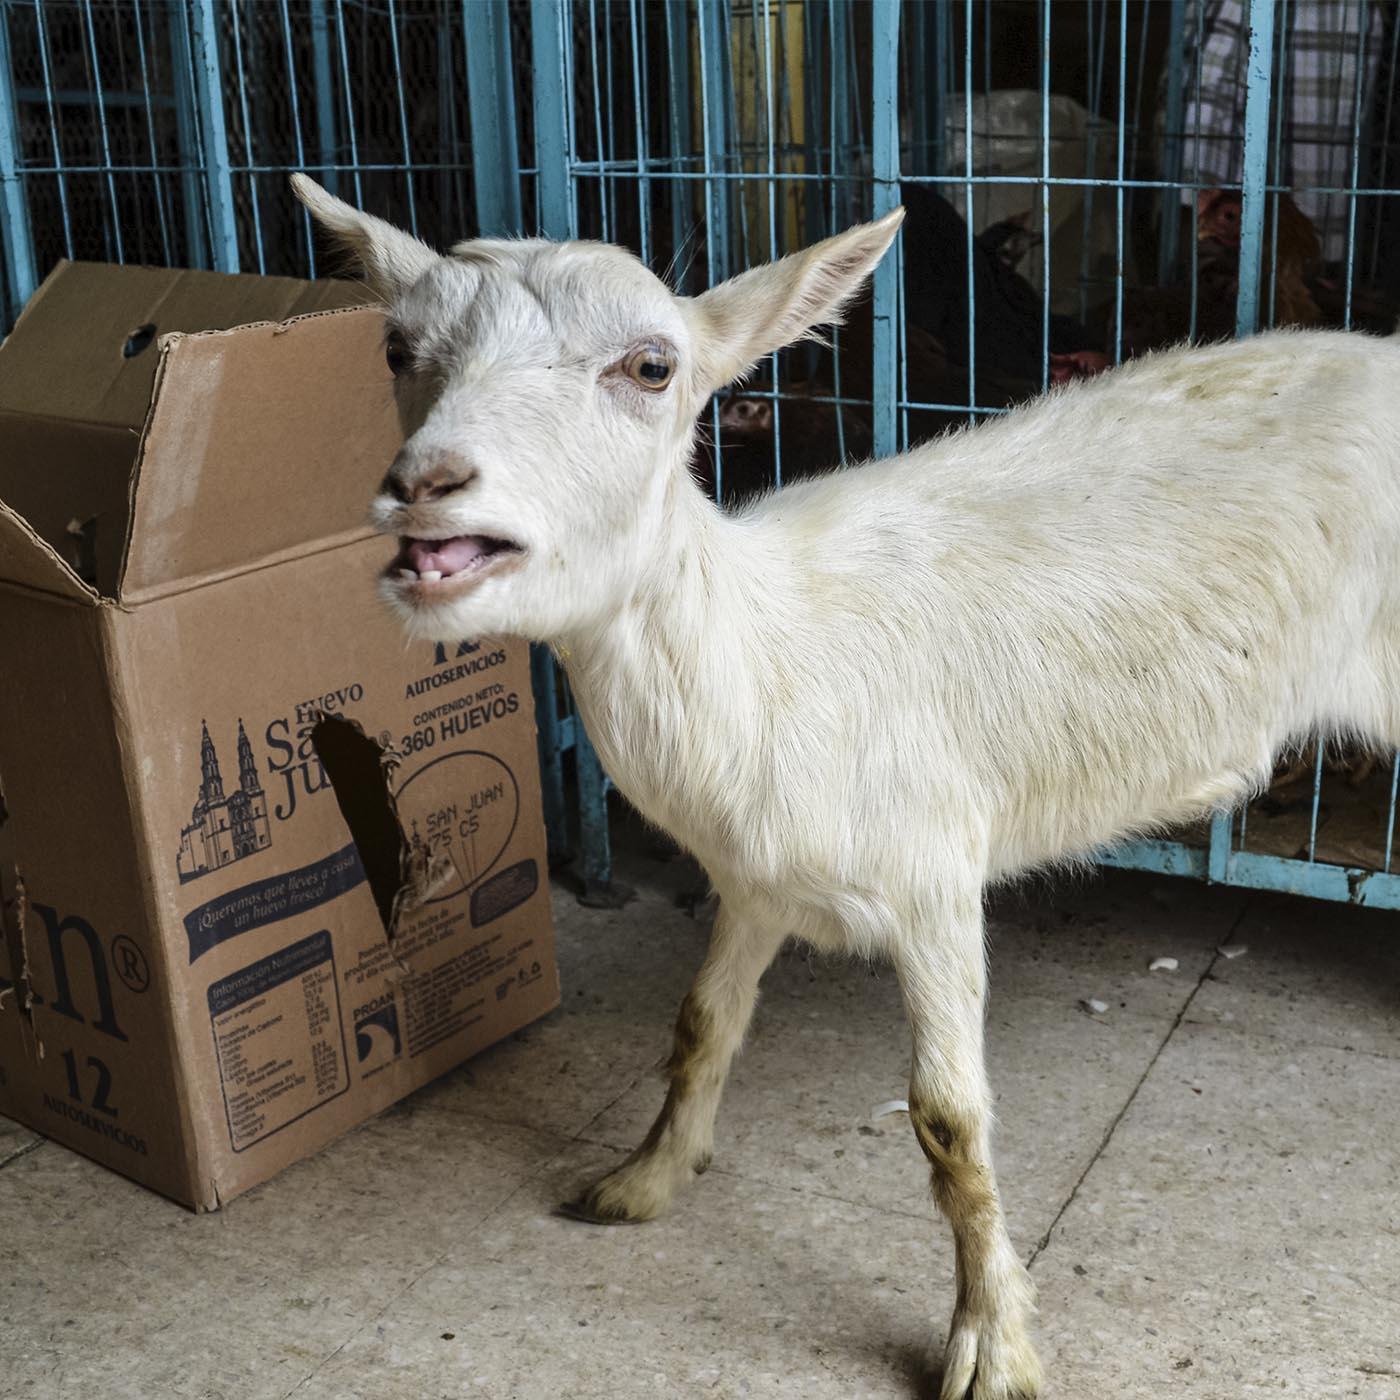 Snout,Goat,Horn,Goat-antelope,Goats,farmed animal,Shipping box